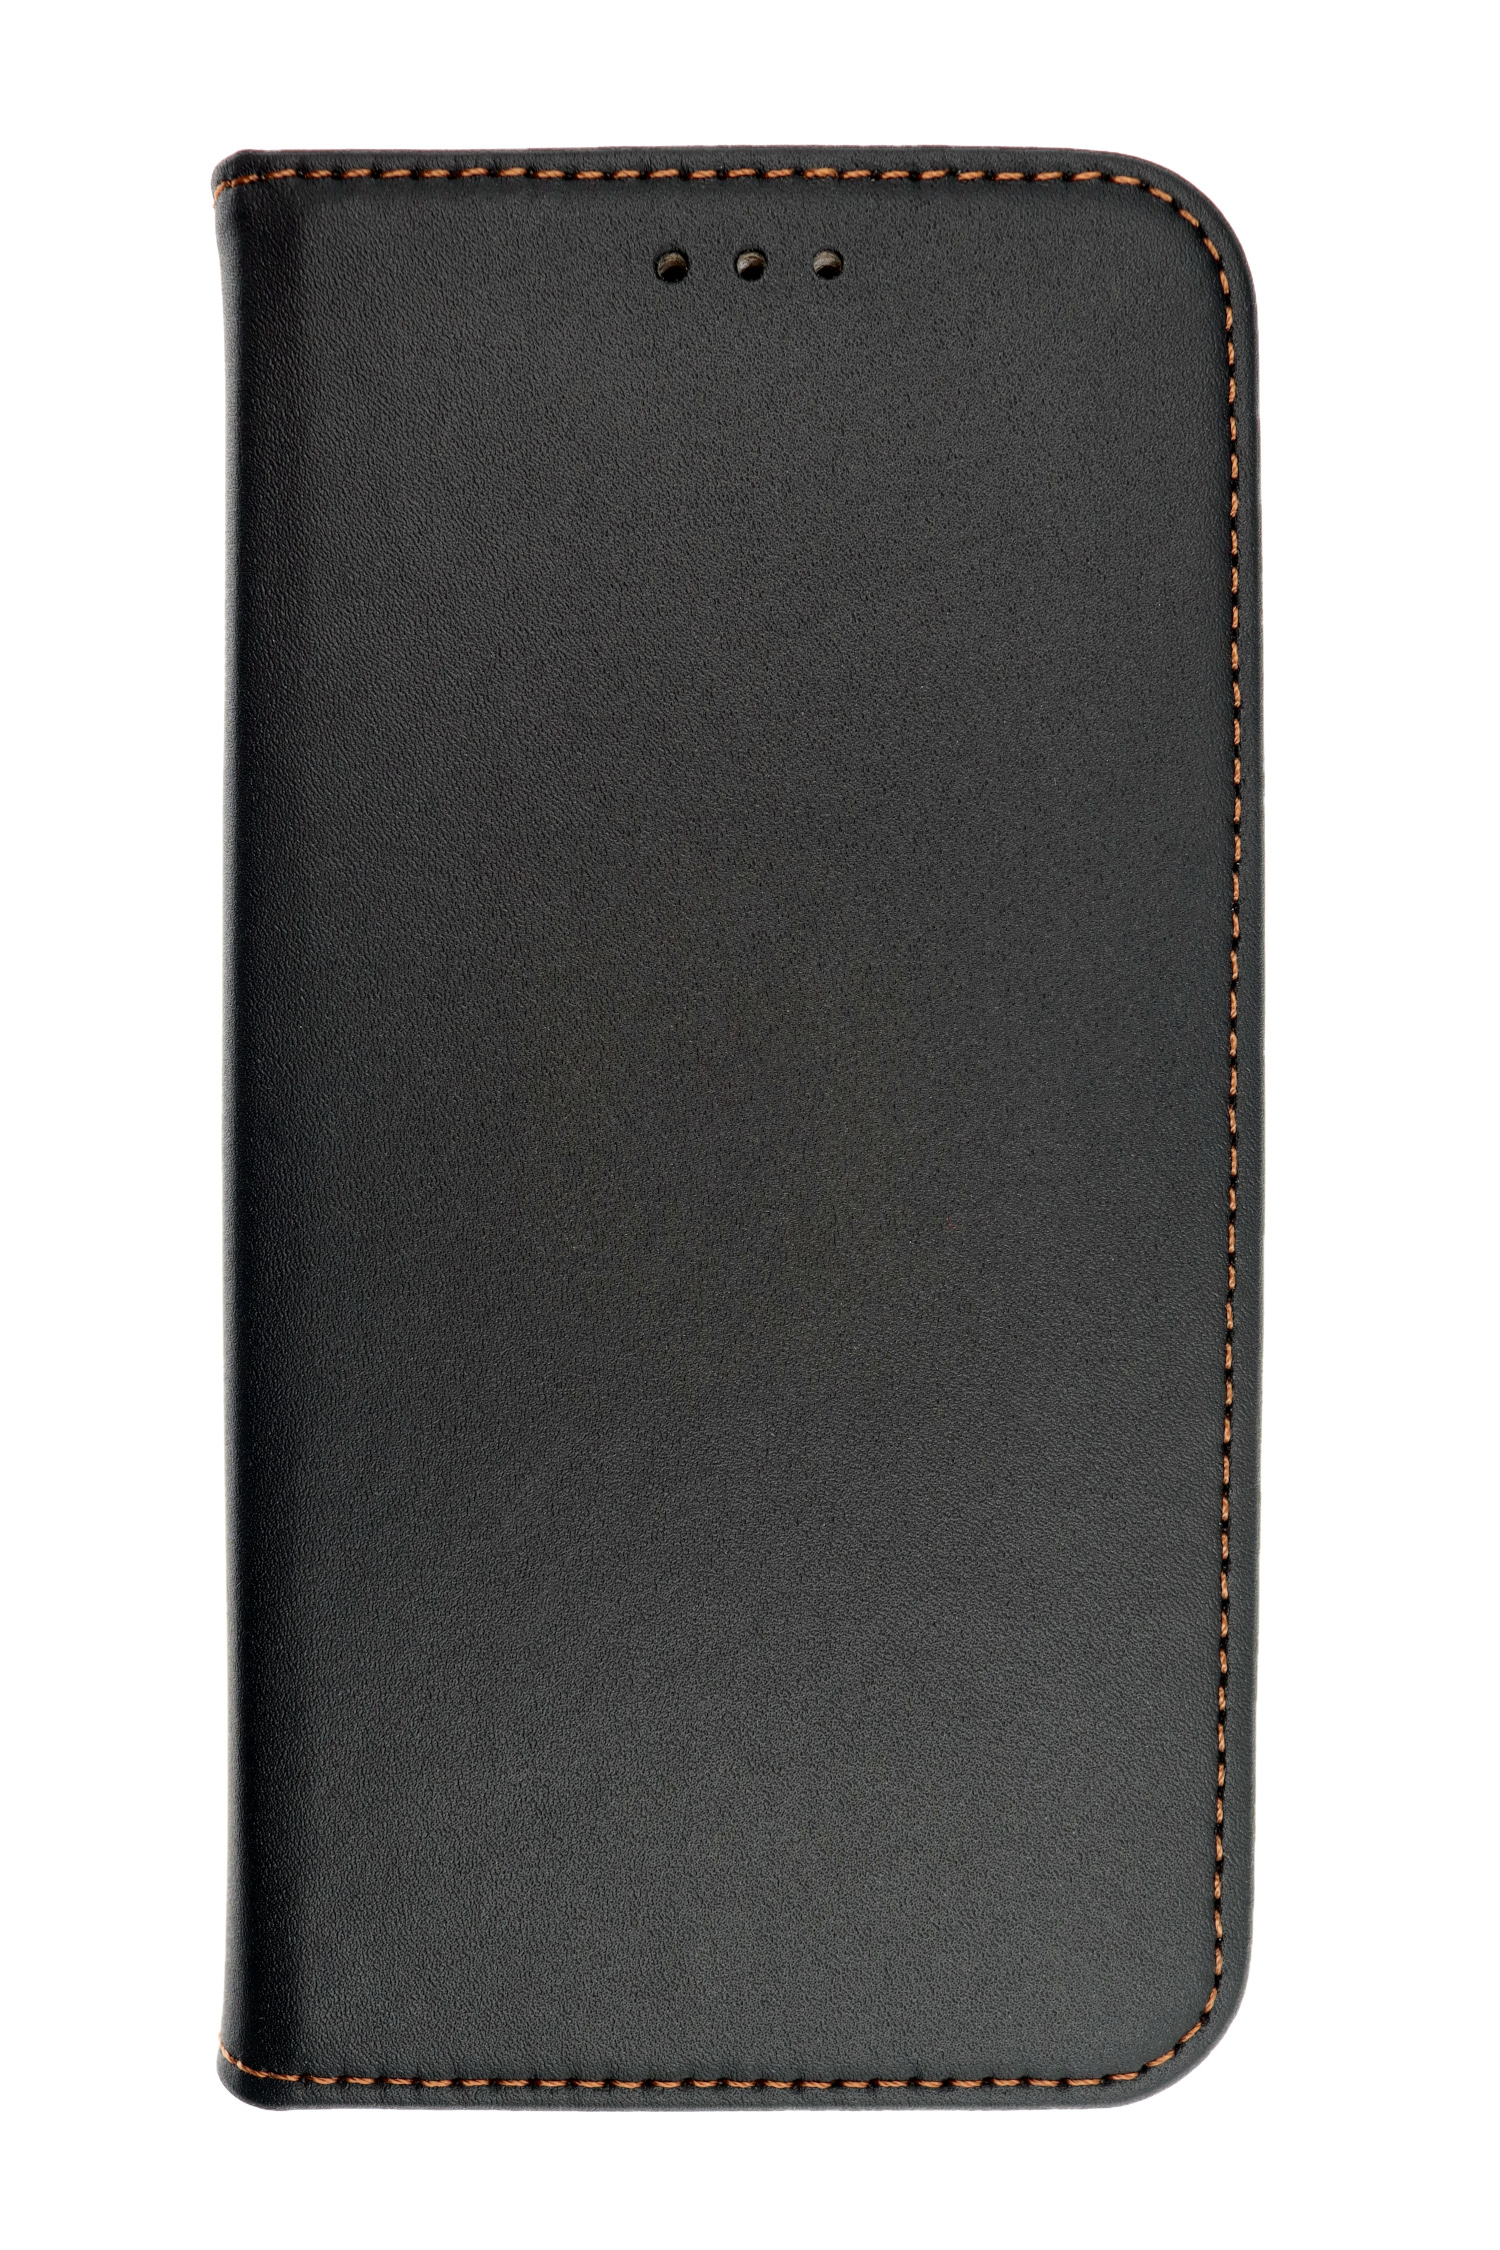 JAMCOVER Echt Schwarz S24 5G, Samsung, Bookcover, Bookcase, Leder Galaxy